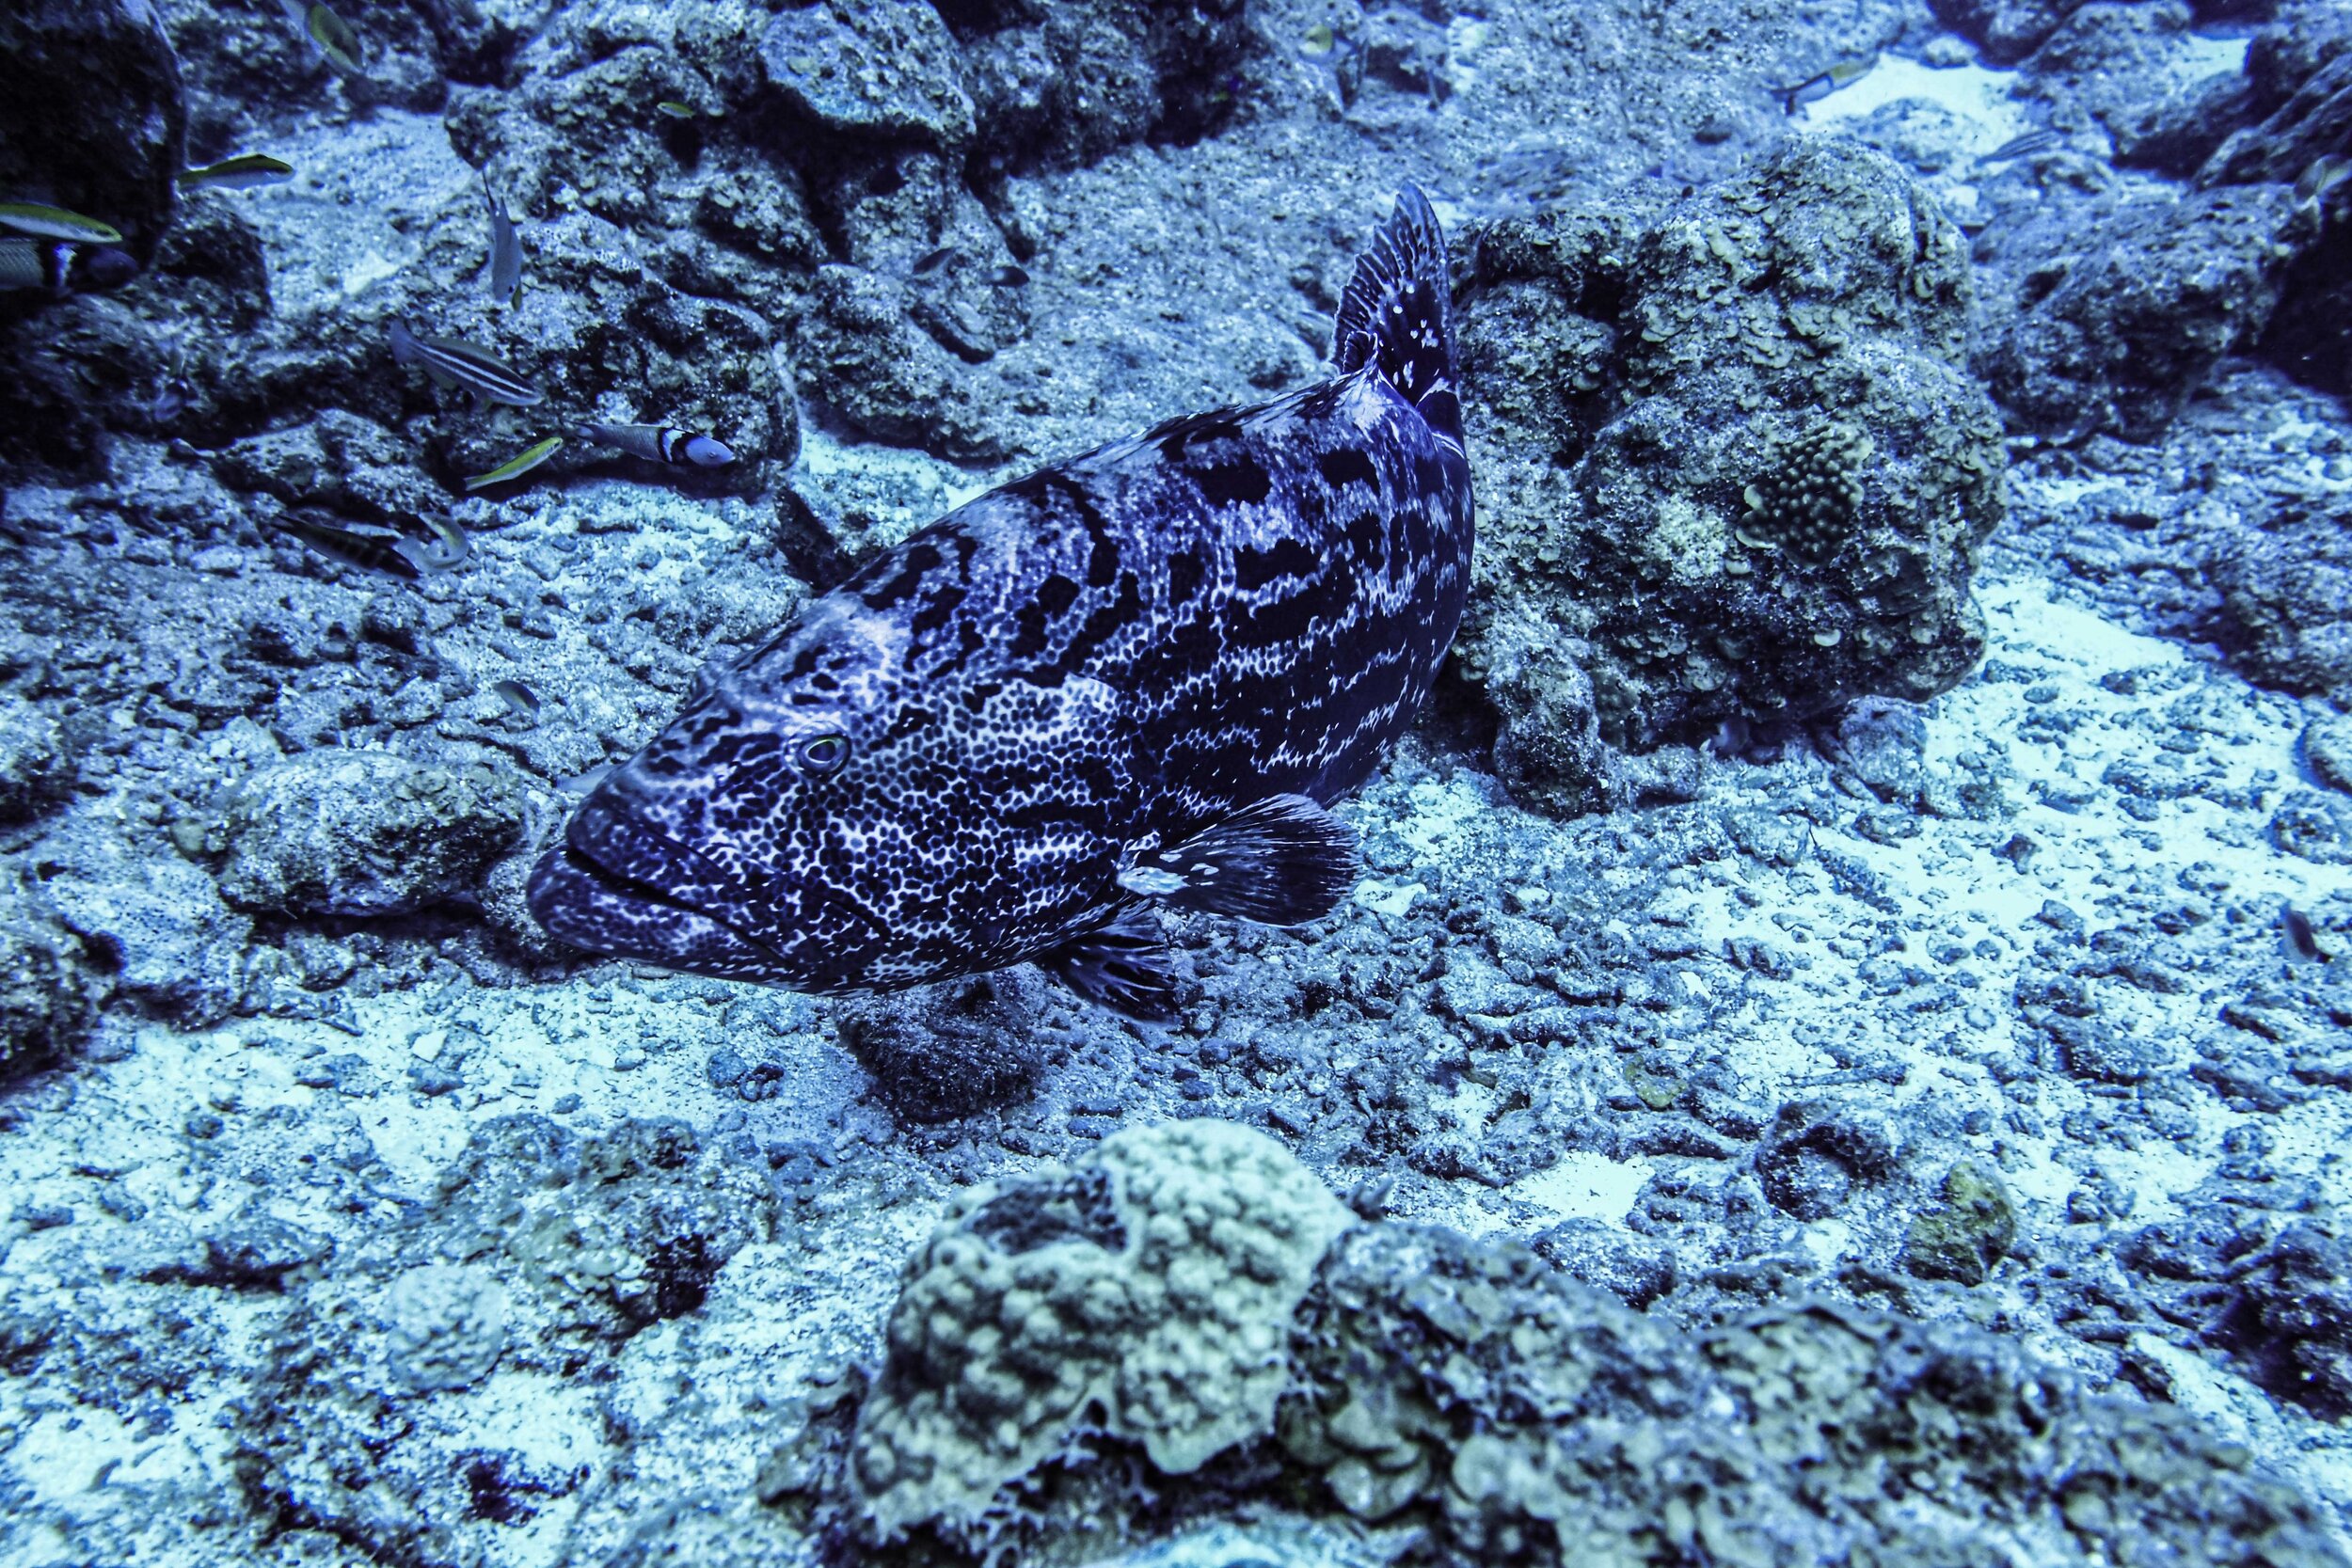  Yellowfin Grouper 